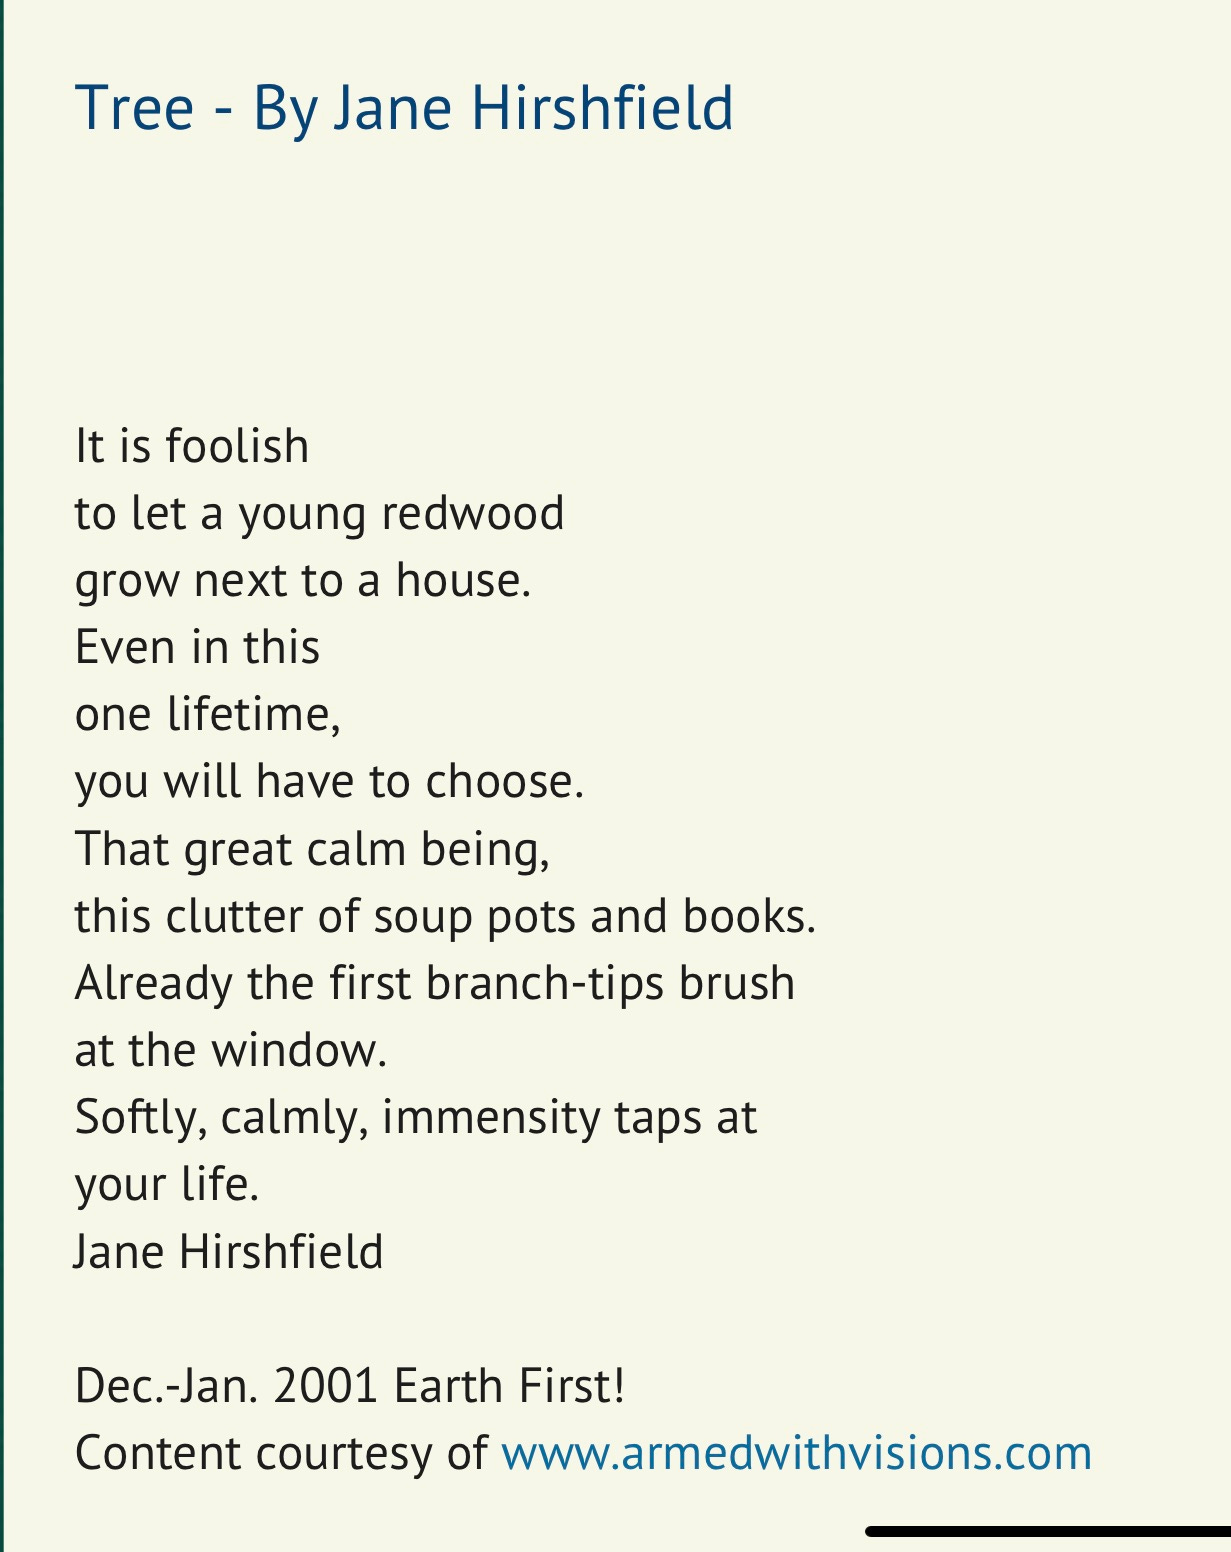 Tree poem, by Jane Hirshfield